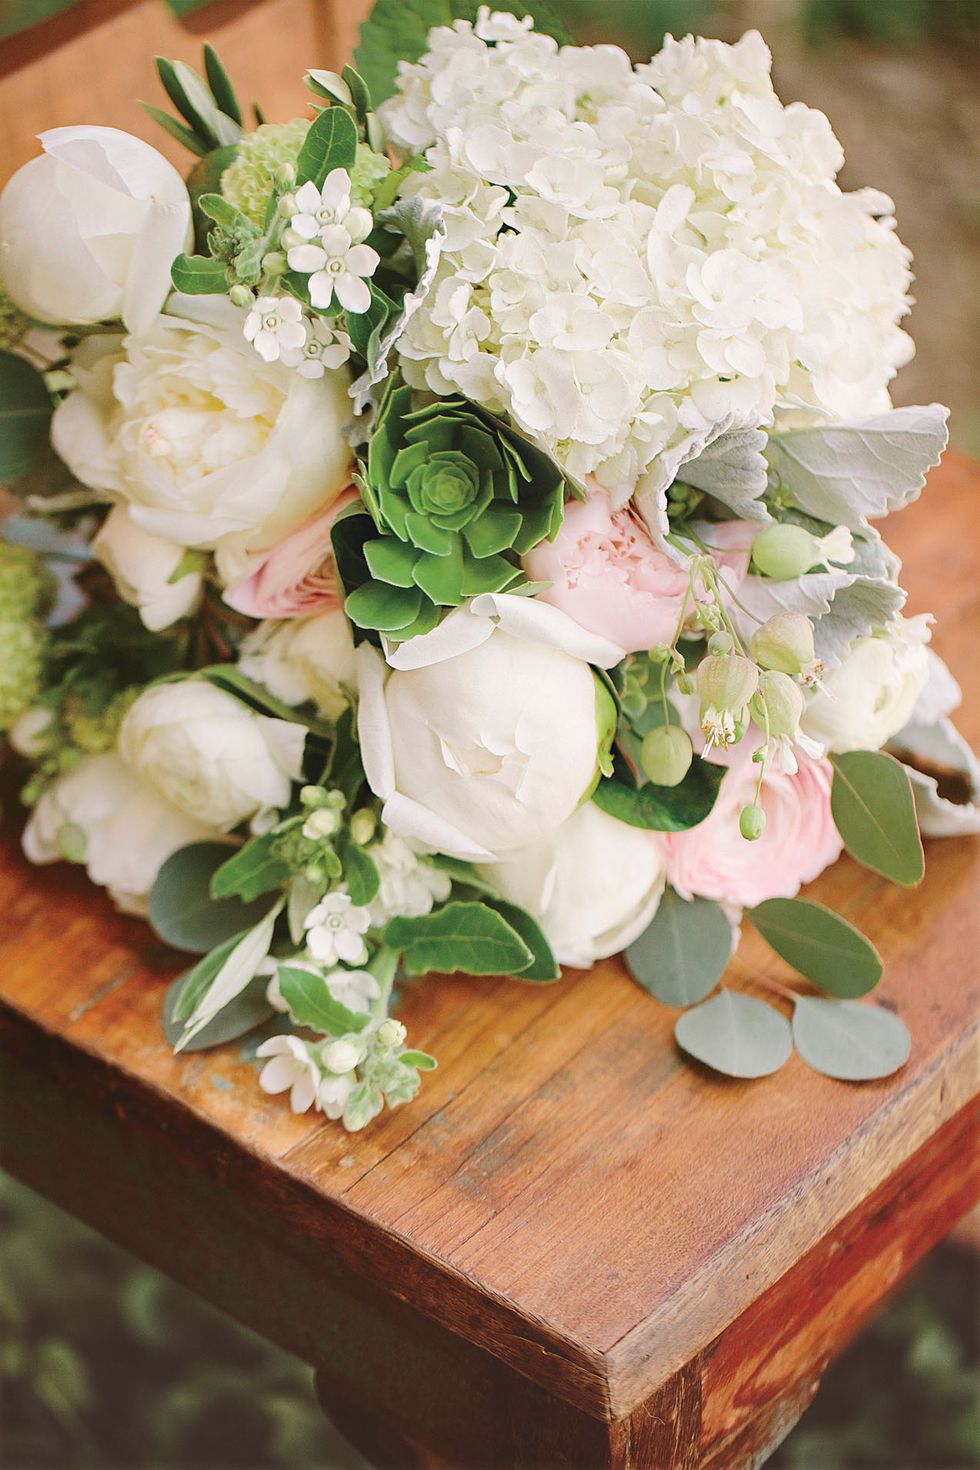 Nikki Reed and Ian Somerhalder's wedding flowers